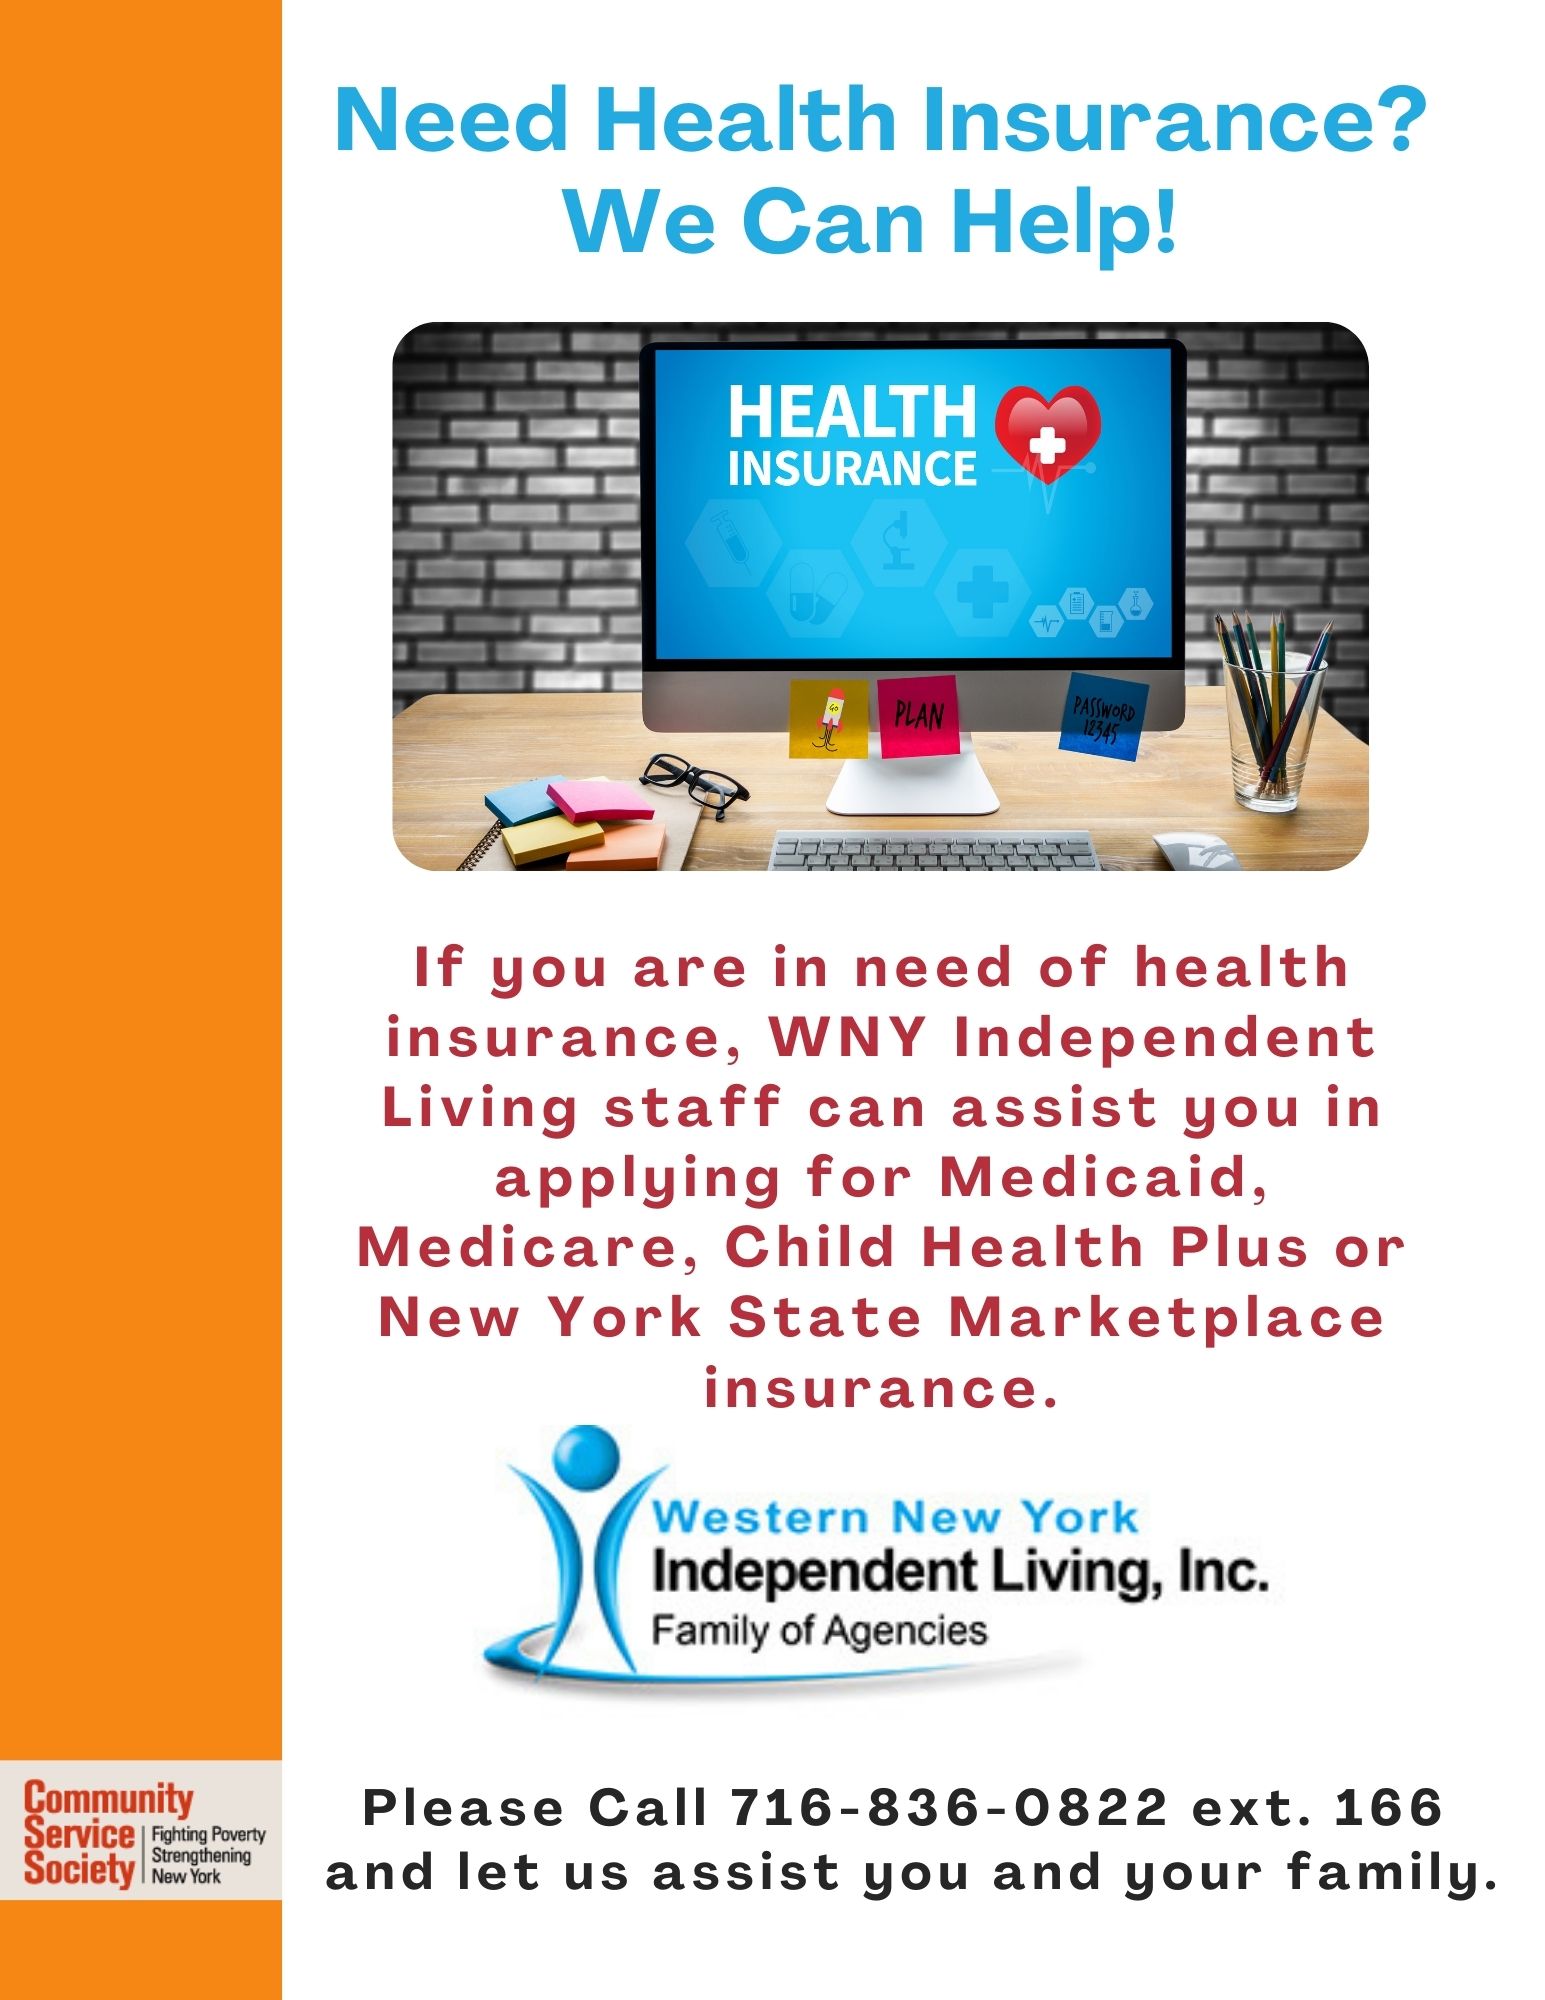 Need health insurance? We can help!